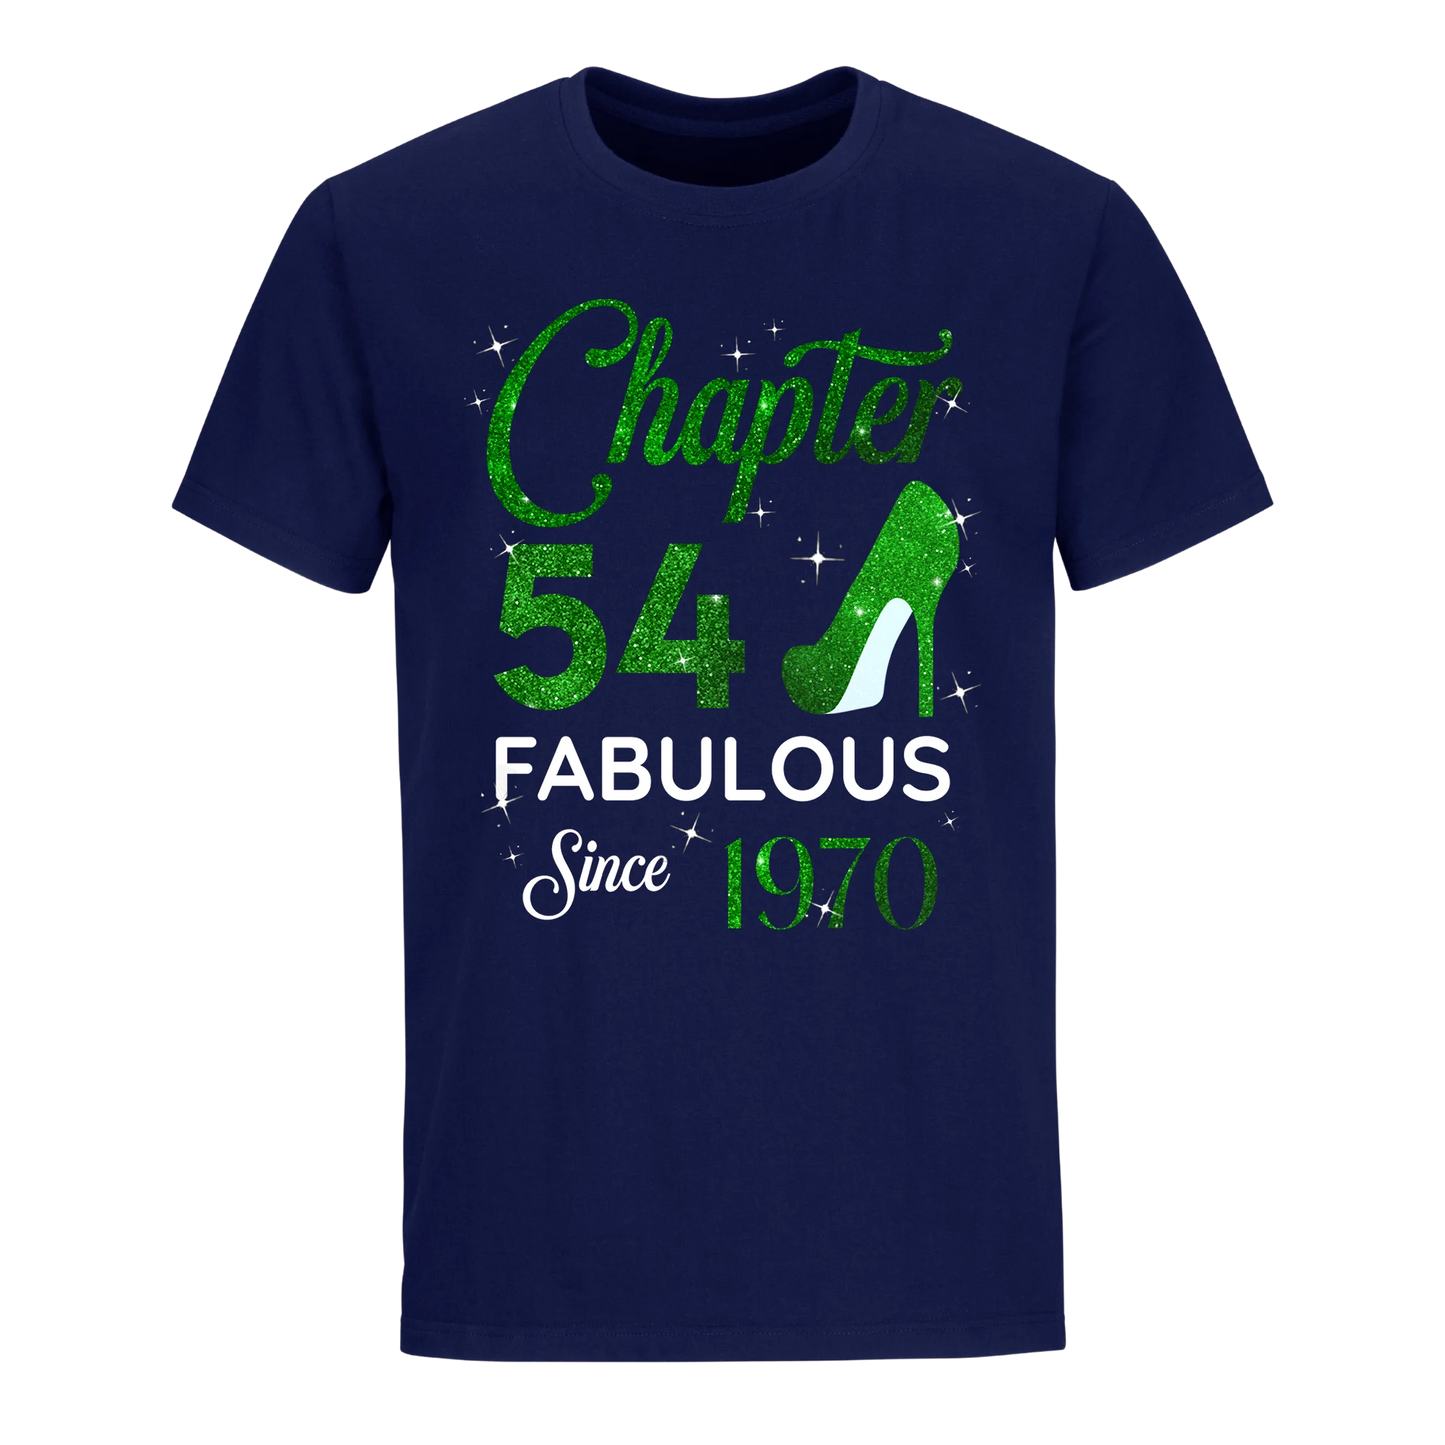 CHAPTER 54TH FABULOUS SINCE 1970 GREEN UNISEX SHIRT